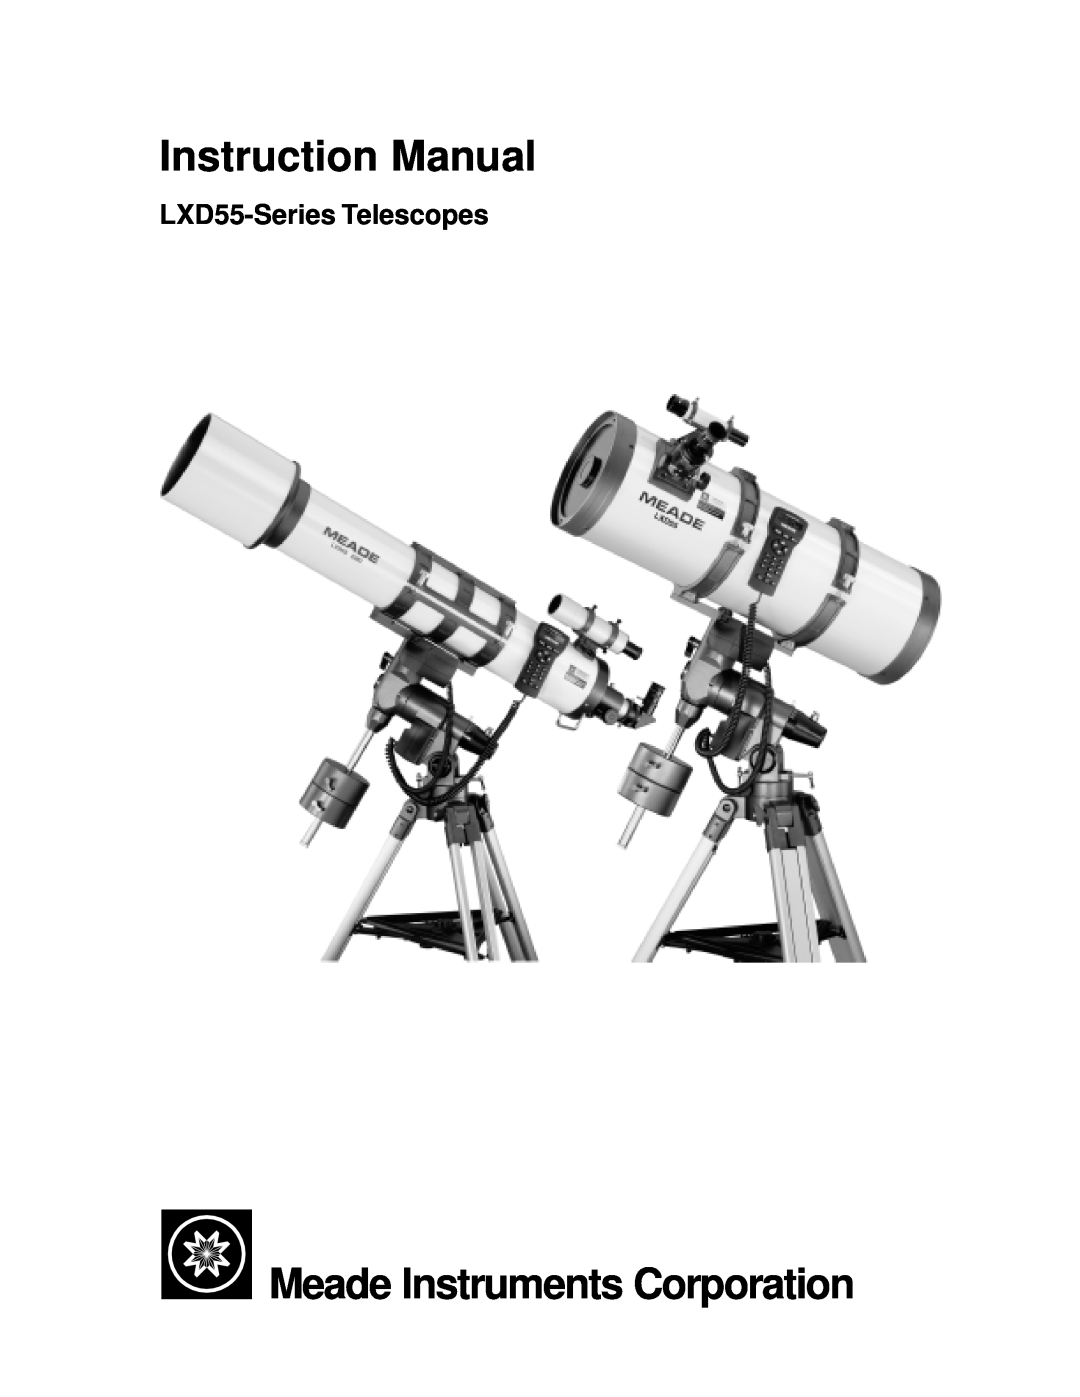 Meade instruction manual Instruction Manual, Meade Instruments Corporation, LXD55-Series Telescopes 